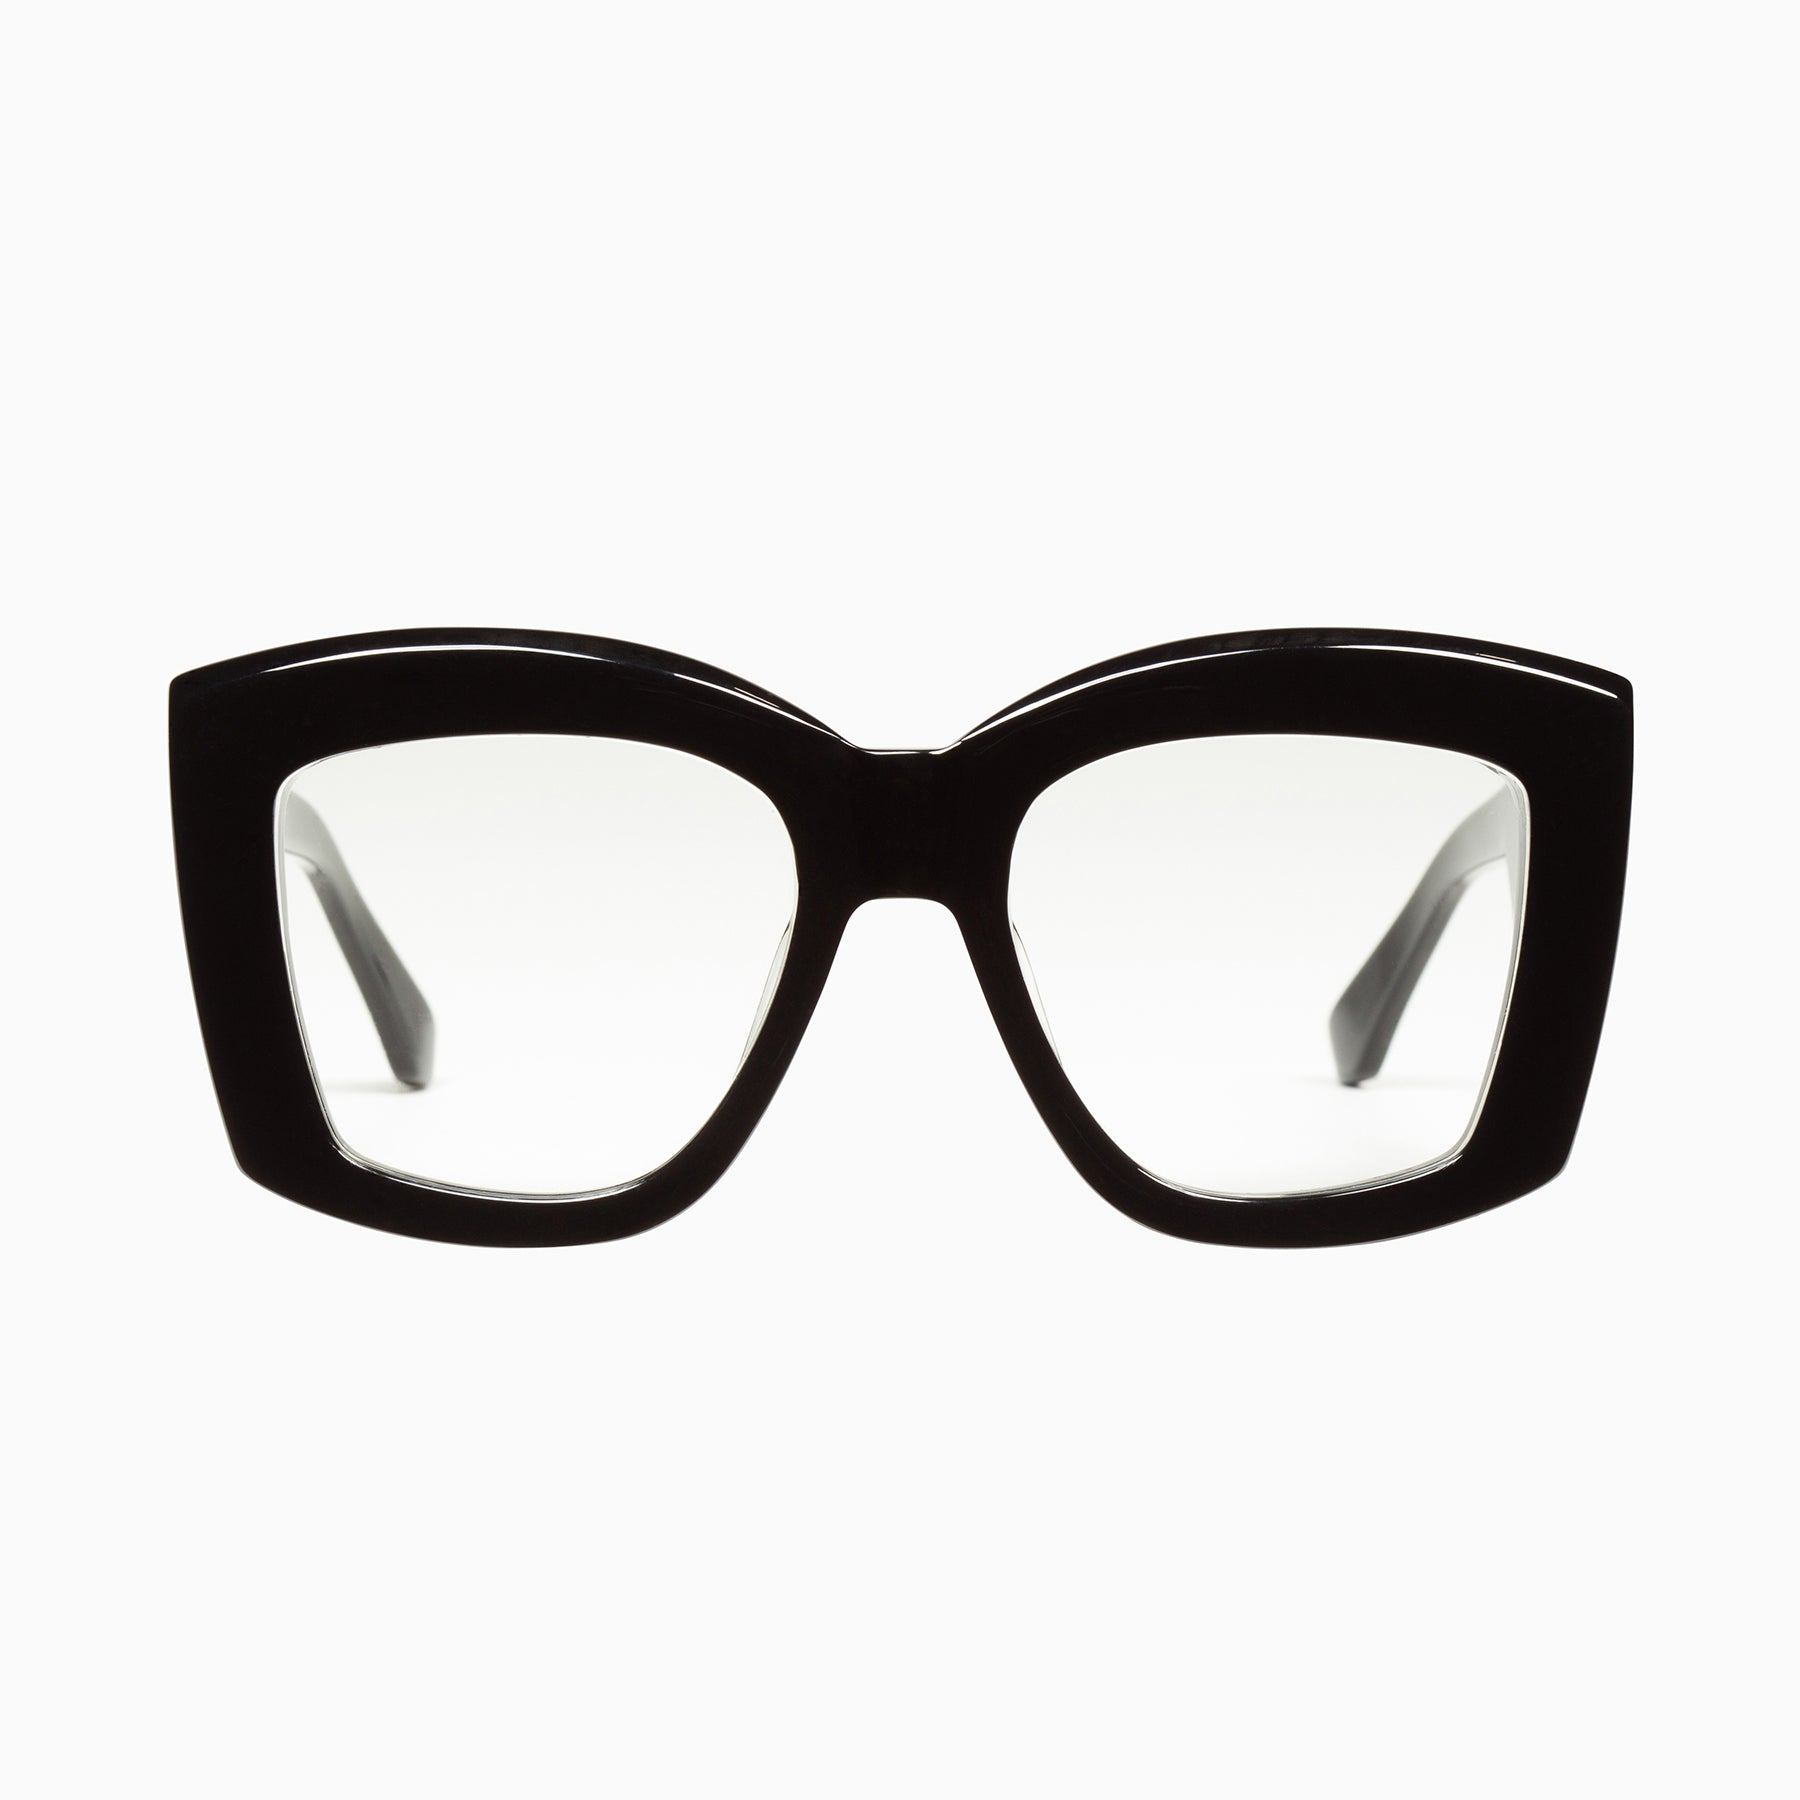 Eyeglass Holders - 21.5mm